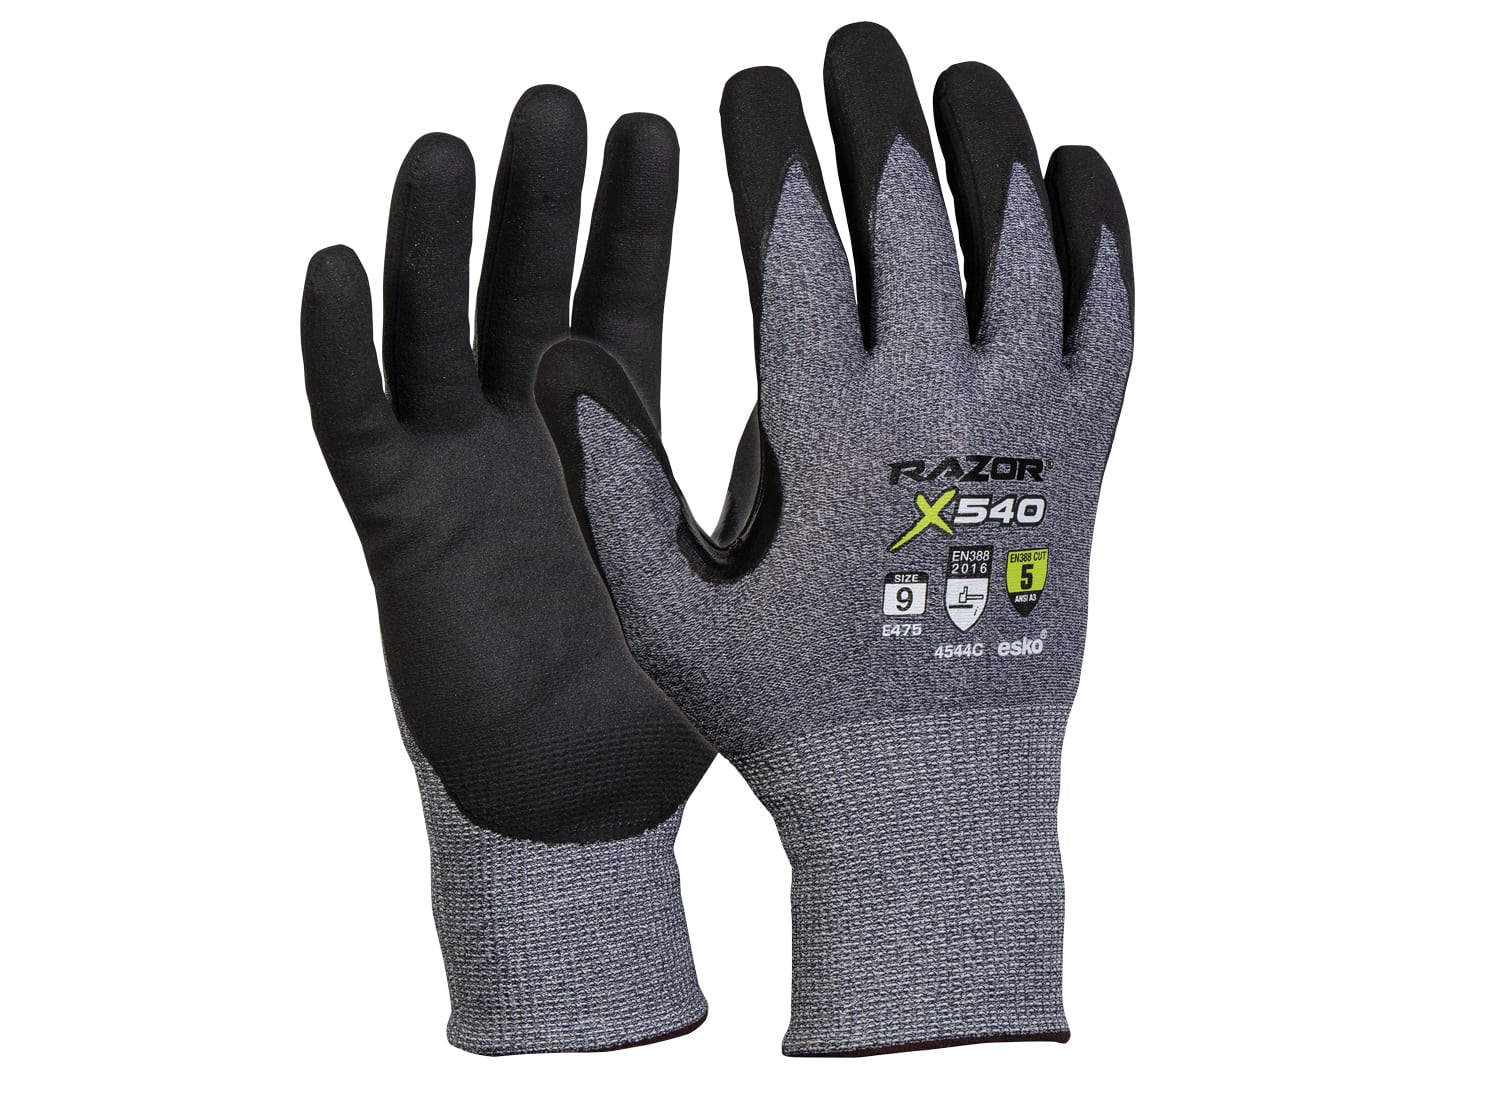 Esko Razor X540 Gloves Size 9